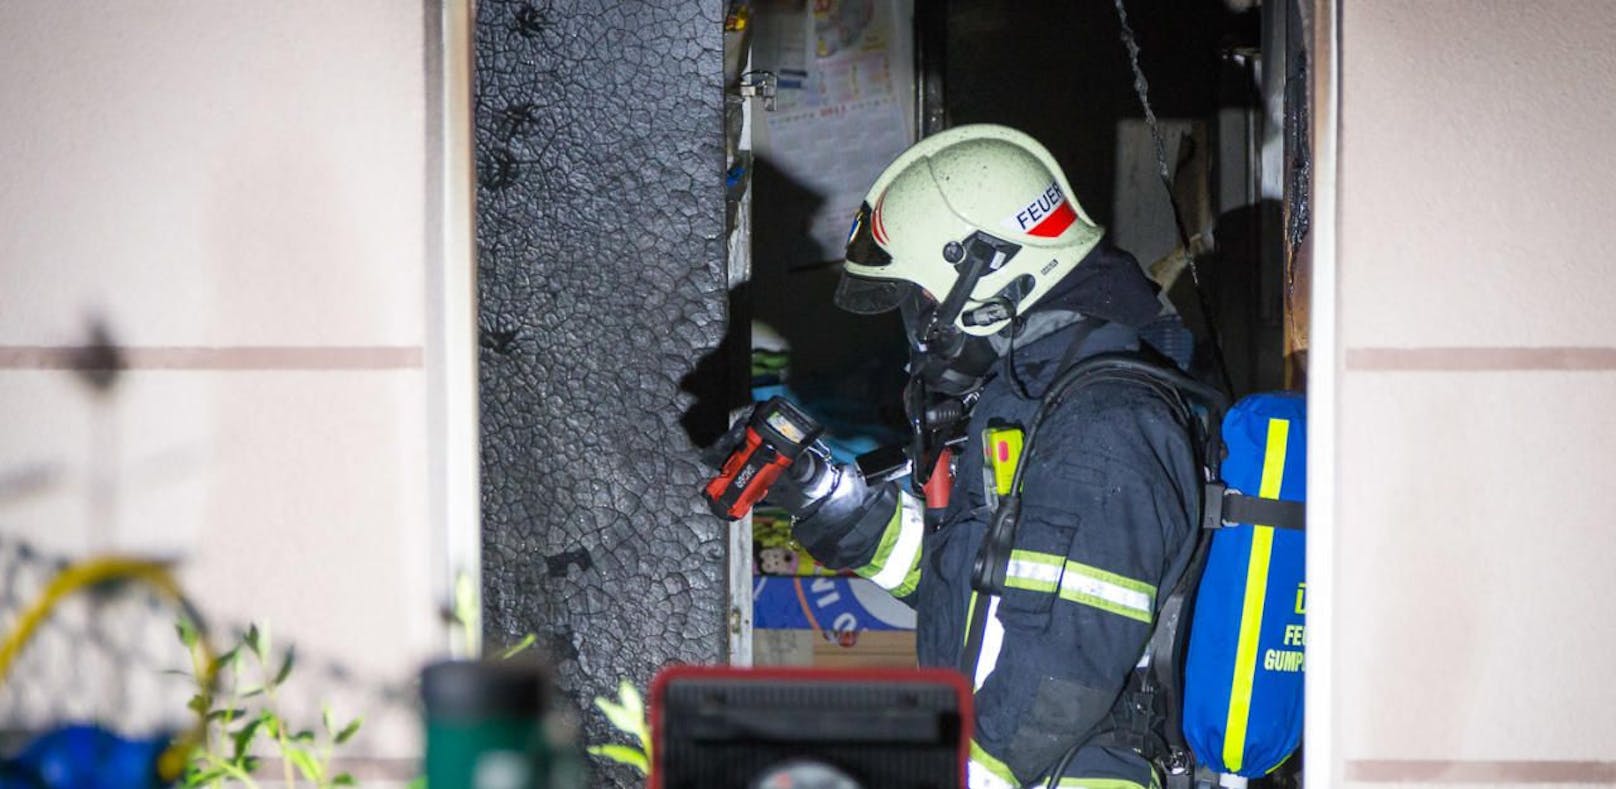 Brand in Küche: Vater rettet Frau, Kinder & Baby